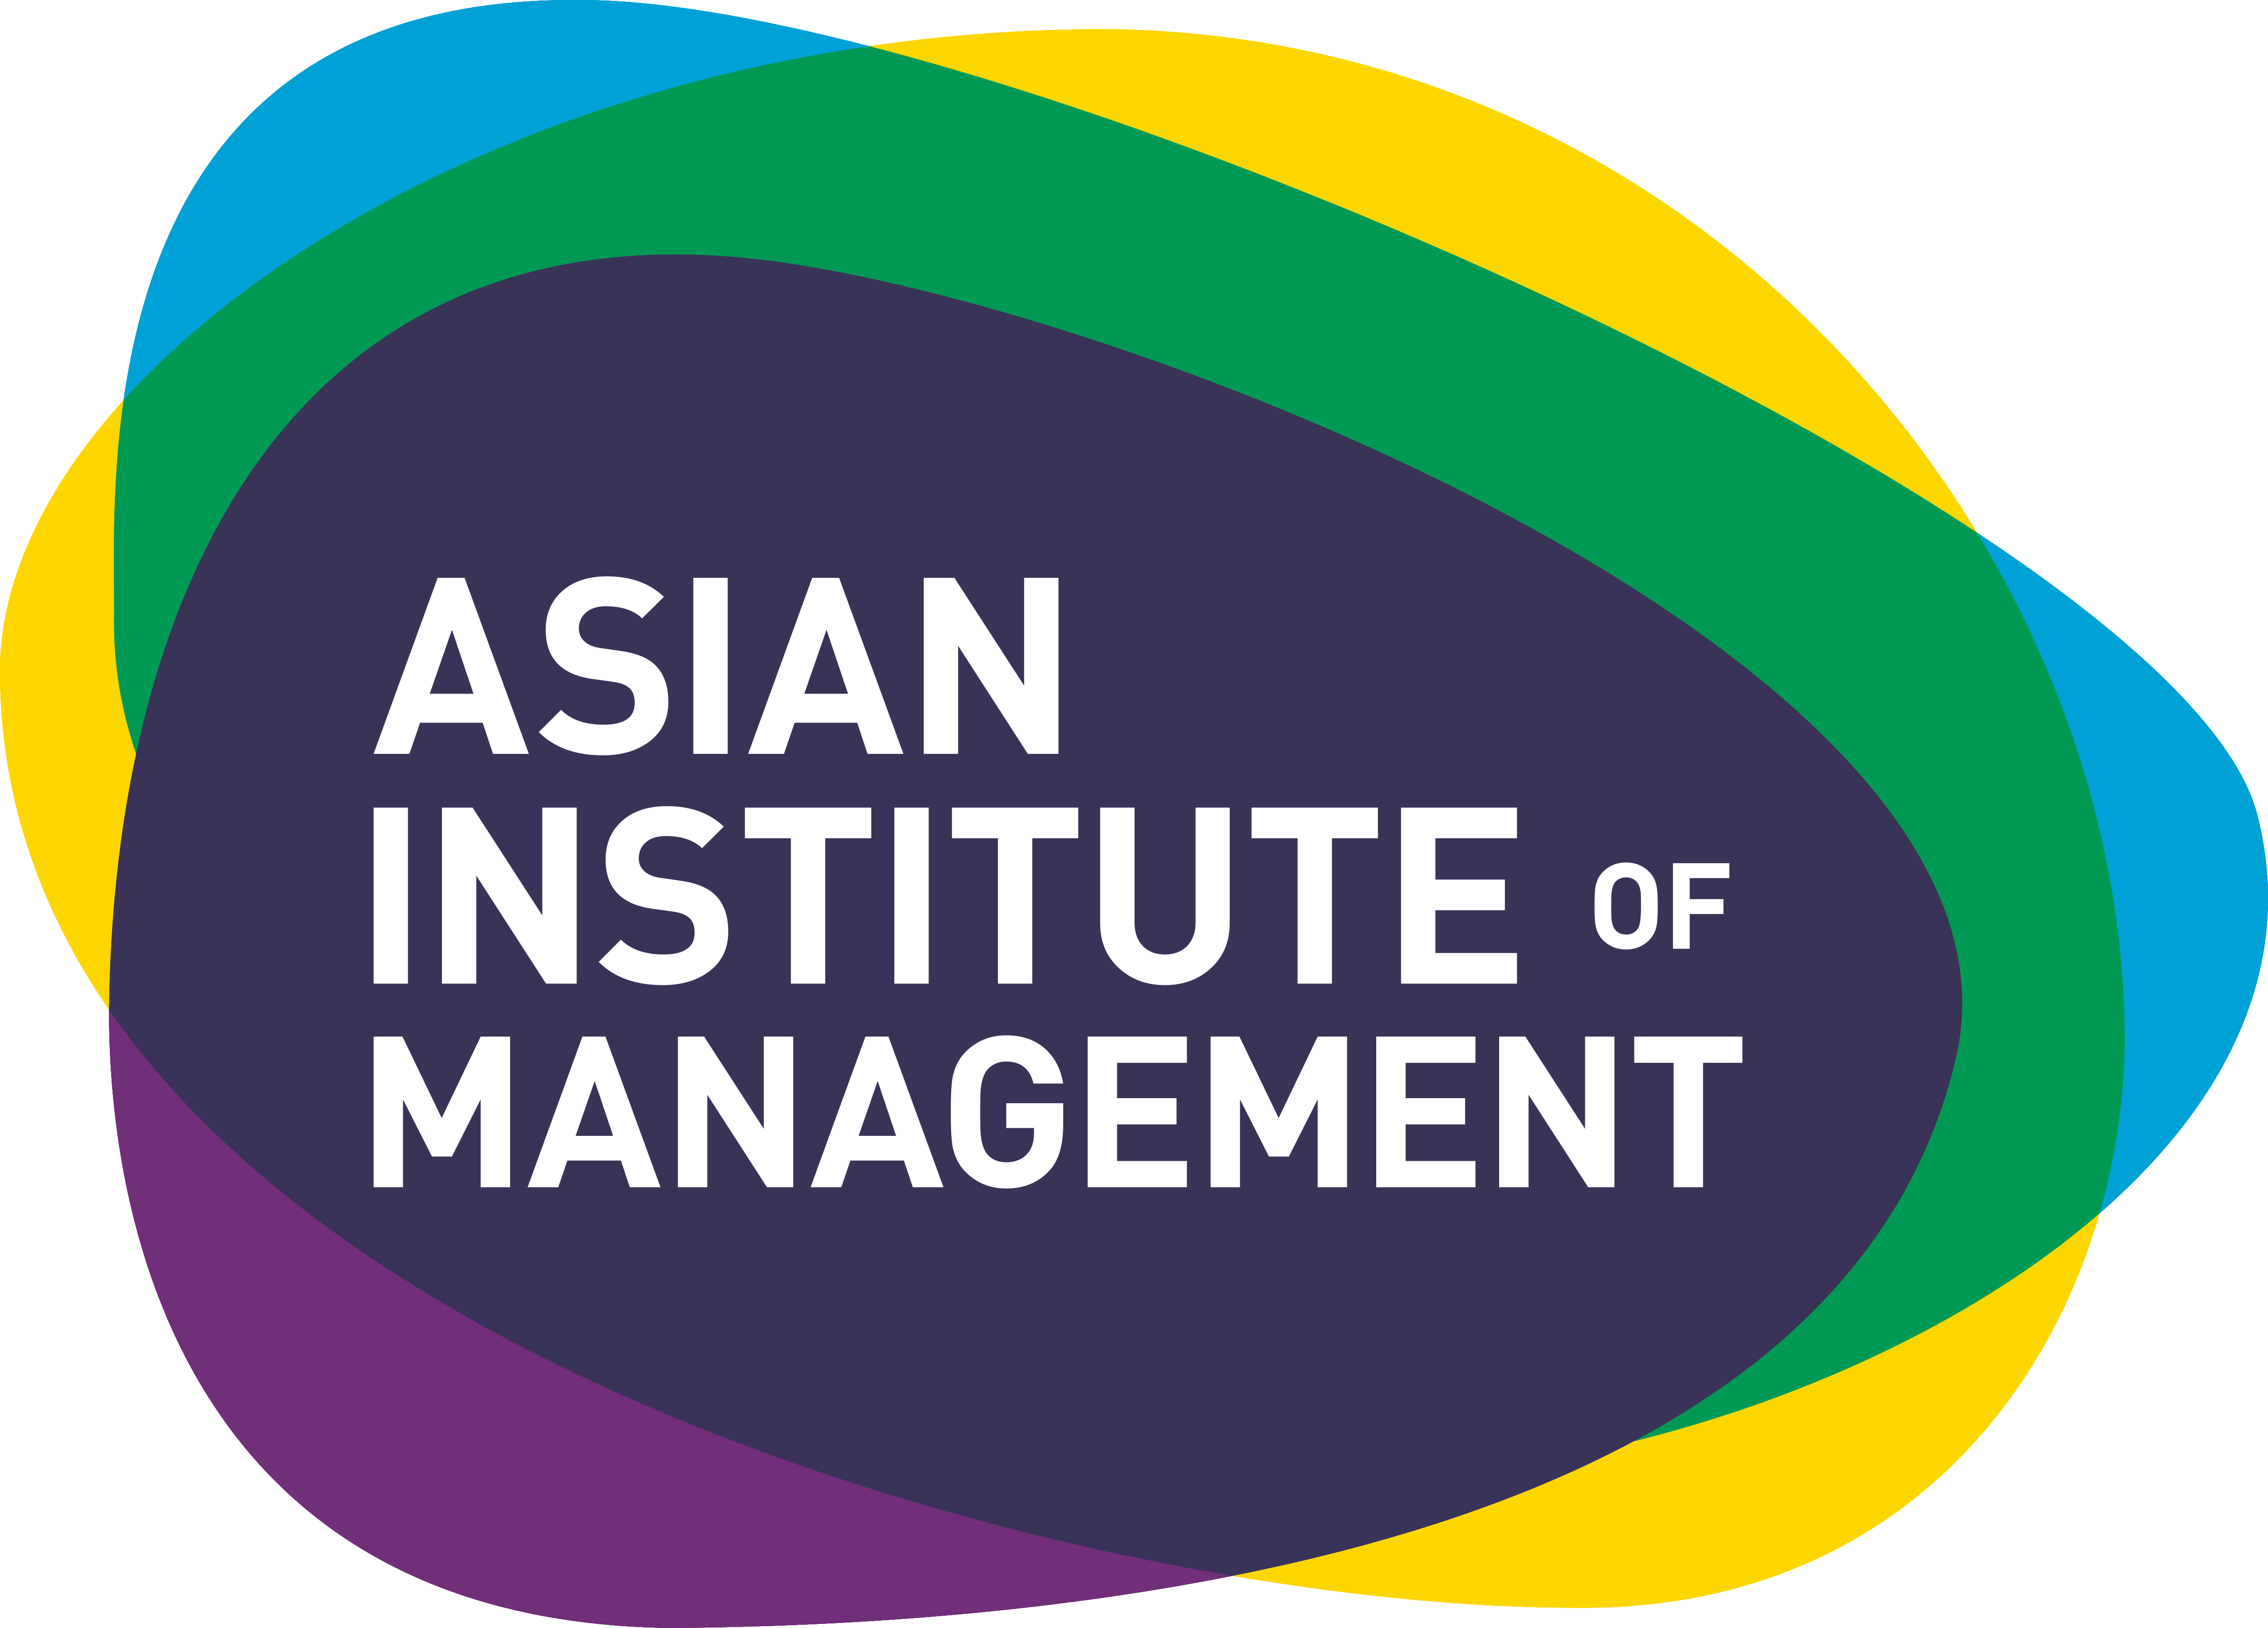  Asian  Institute of Management Logos  Download